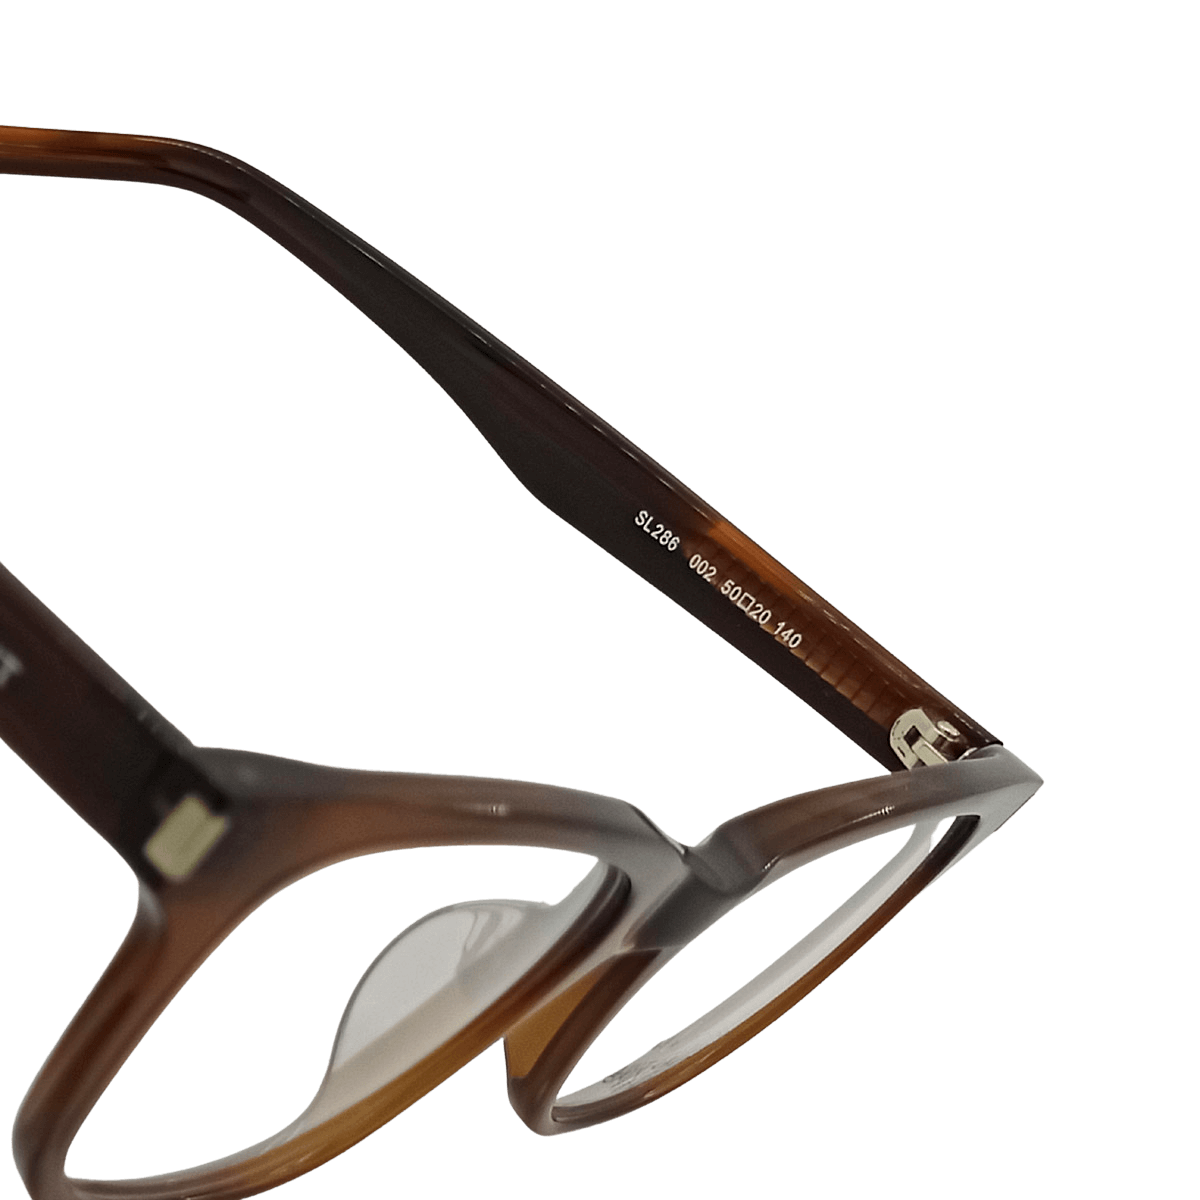 Buy Authentic Executive Quality Tom Ford Eyeglasses bd | Nine Optic